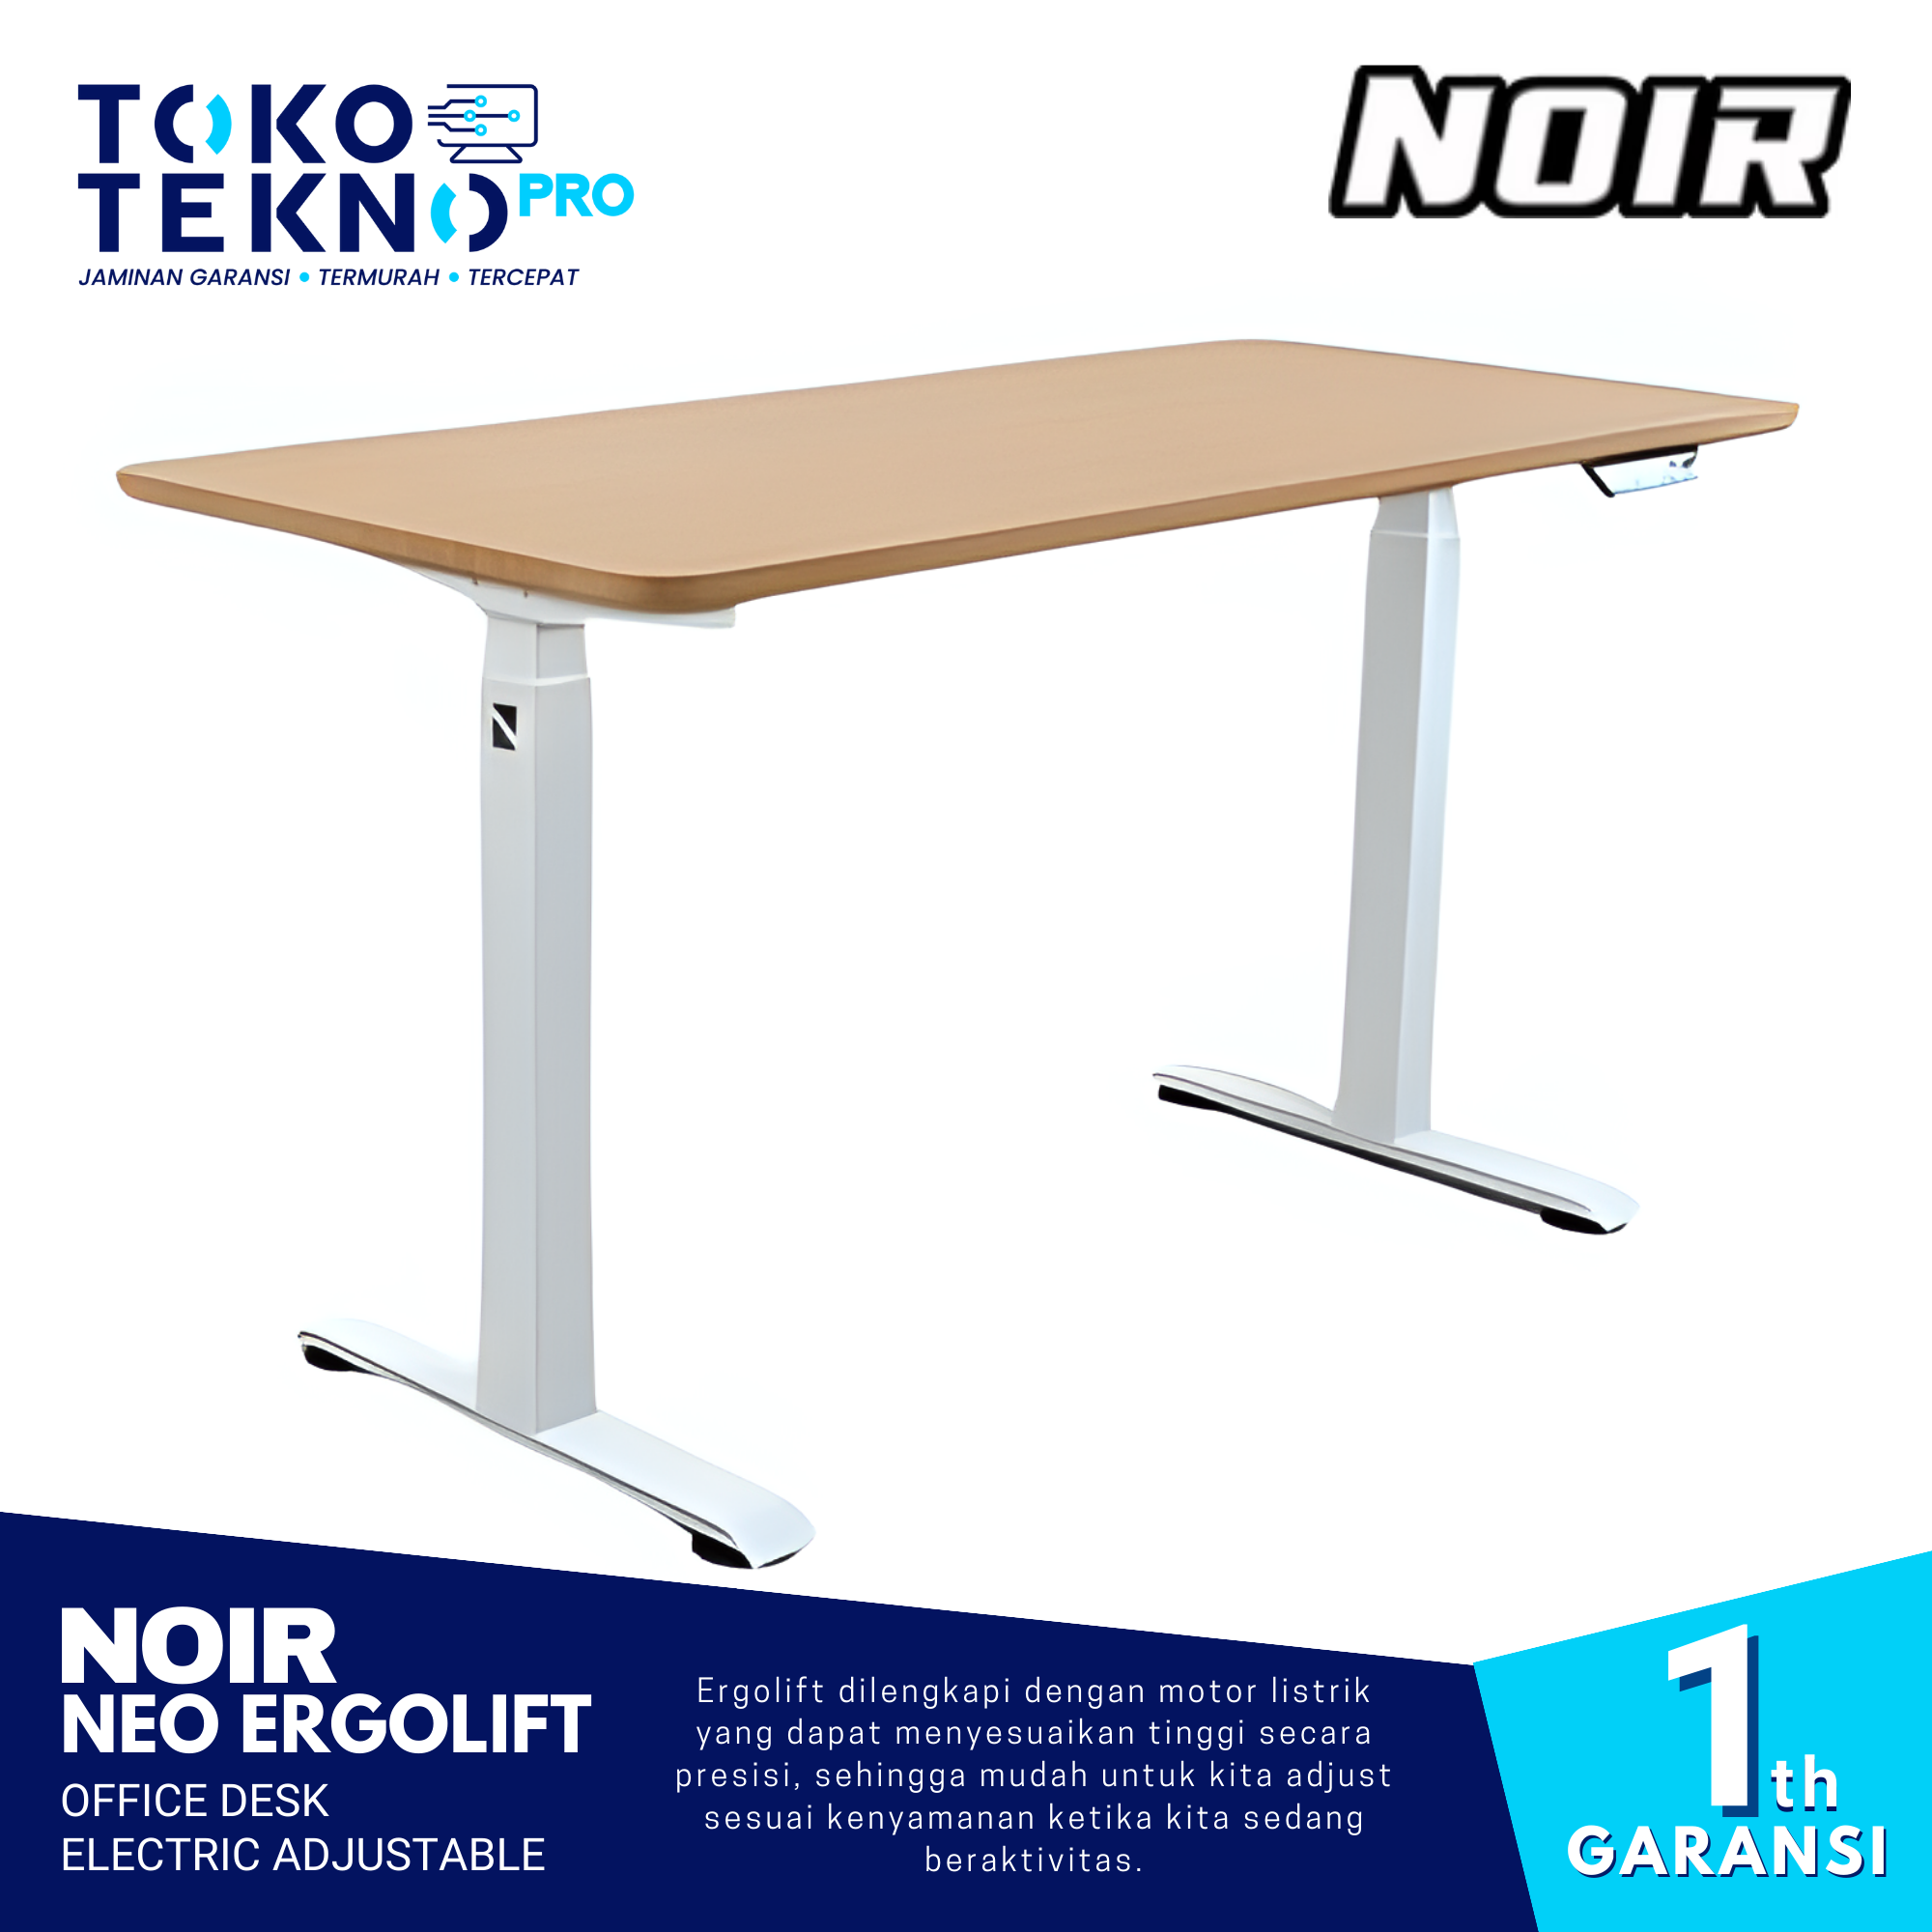 Noir Neo Ergolift Office Desk Electric Adjustable Kaki Meja Elektrik